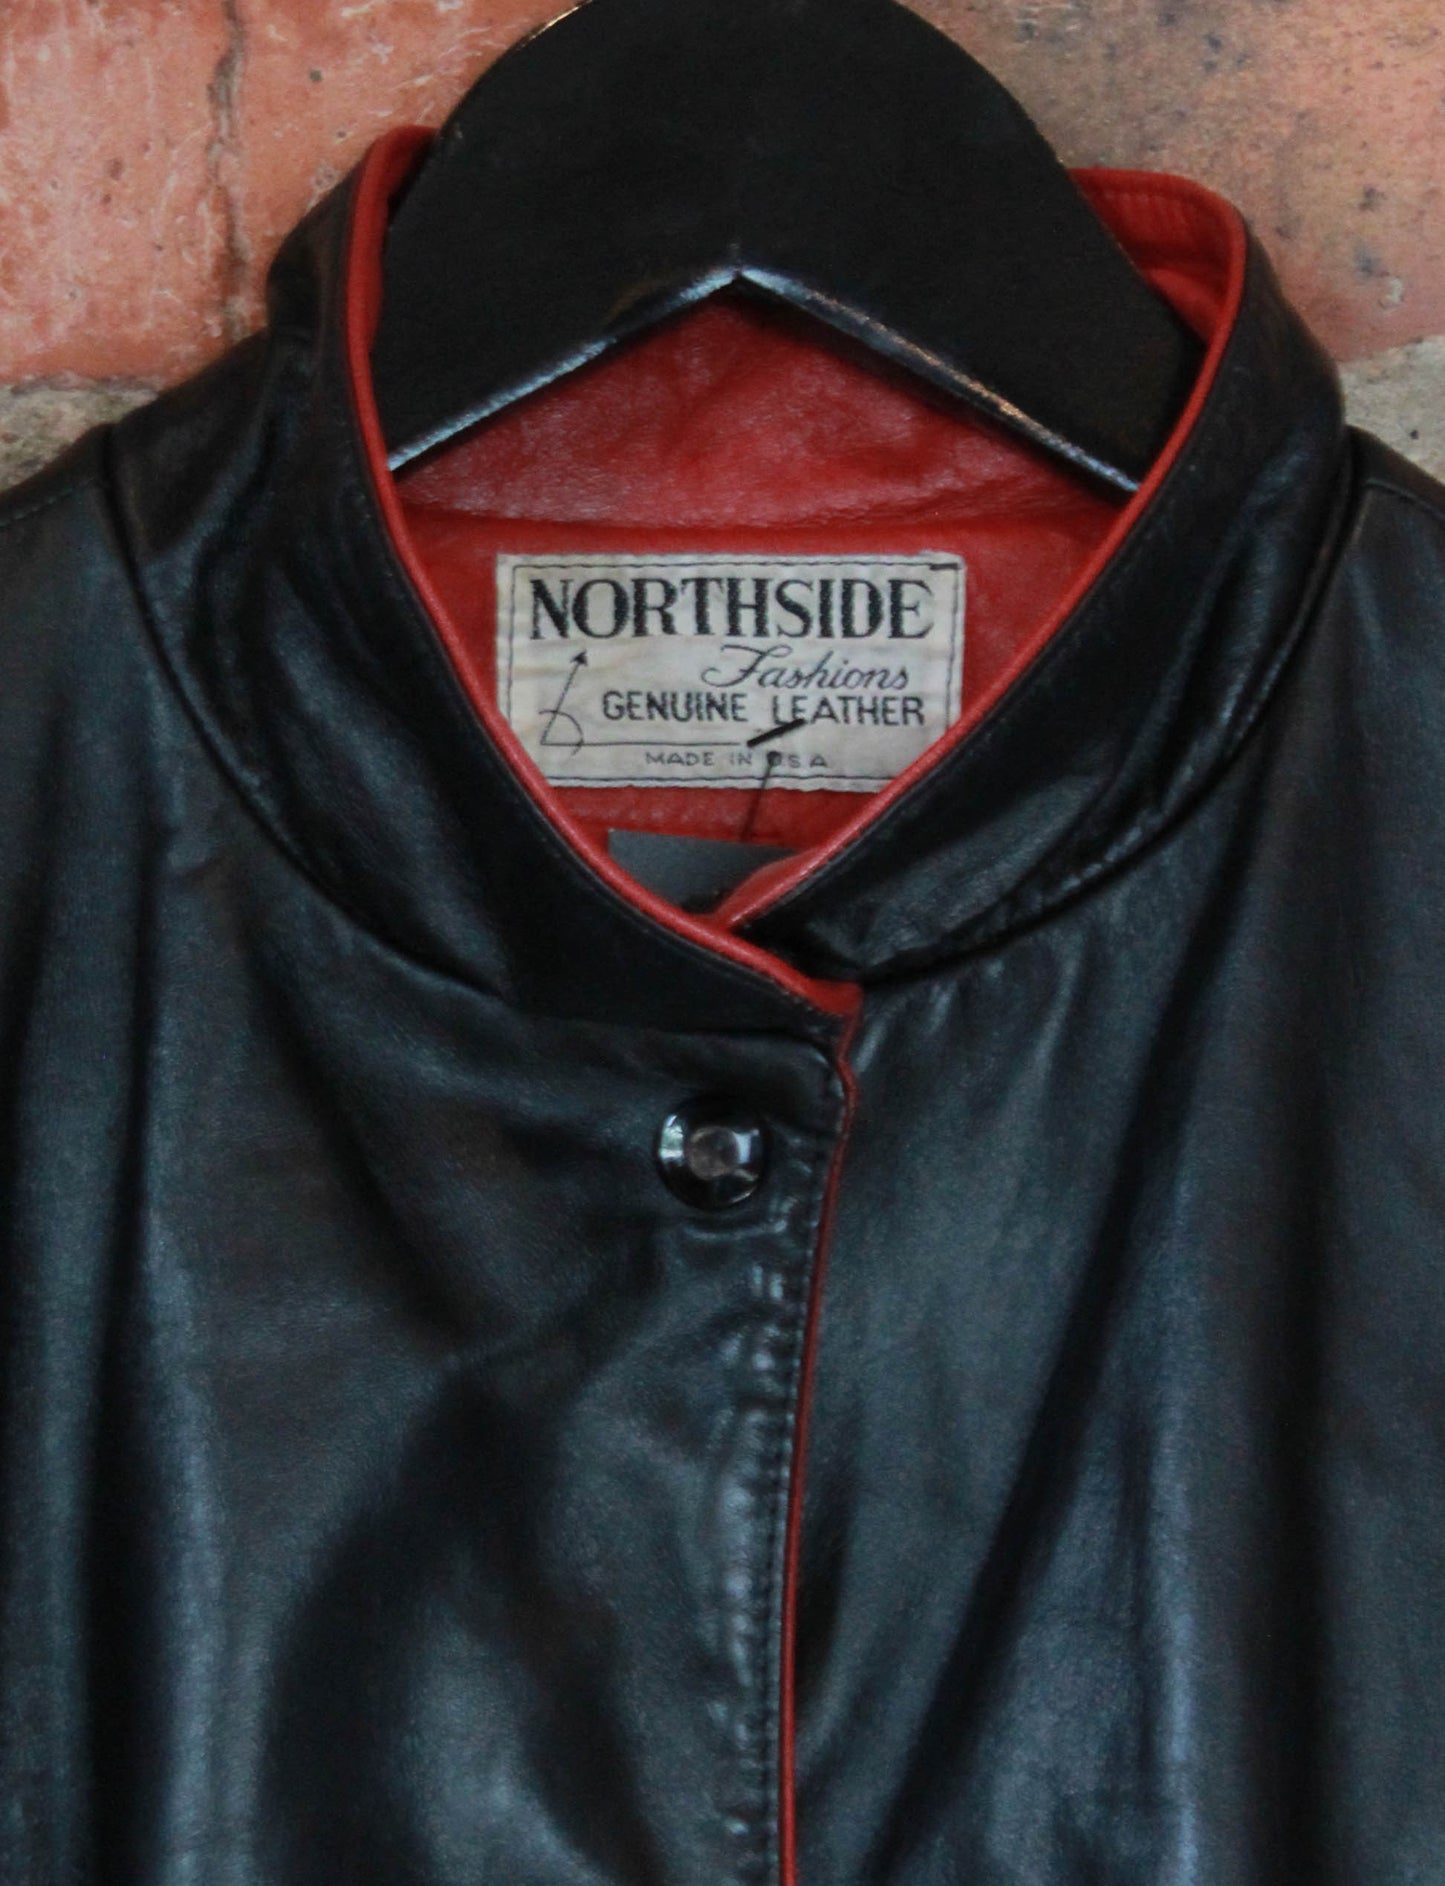 Vintage 80's Leather Jacket With Wings Unisex Medium